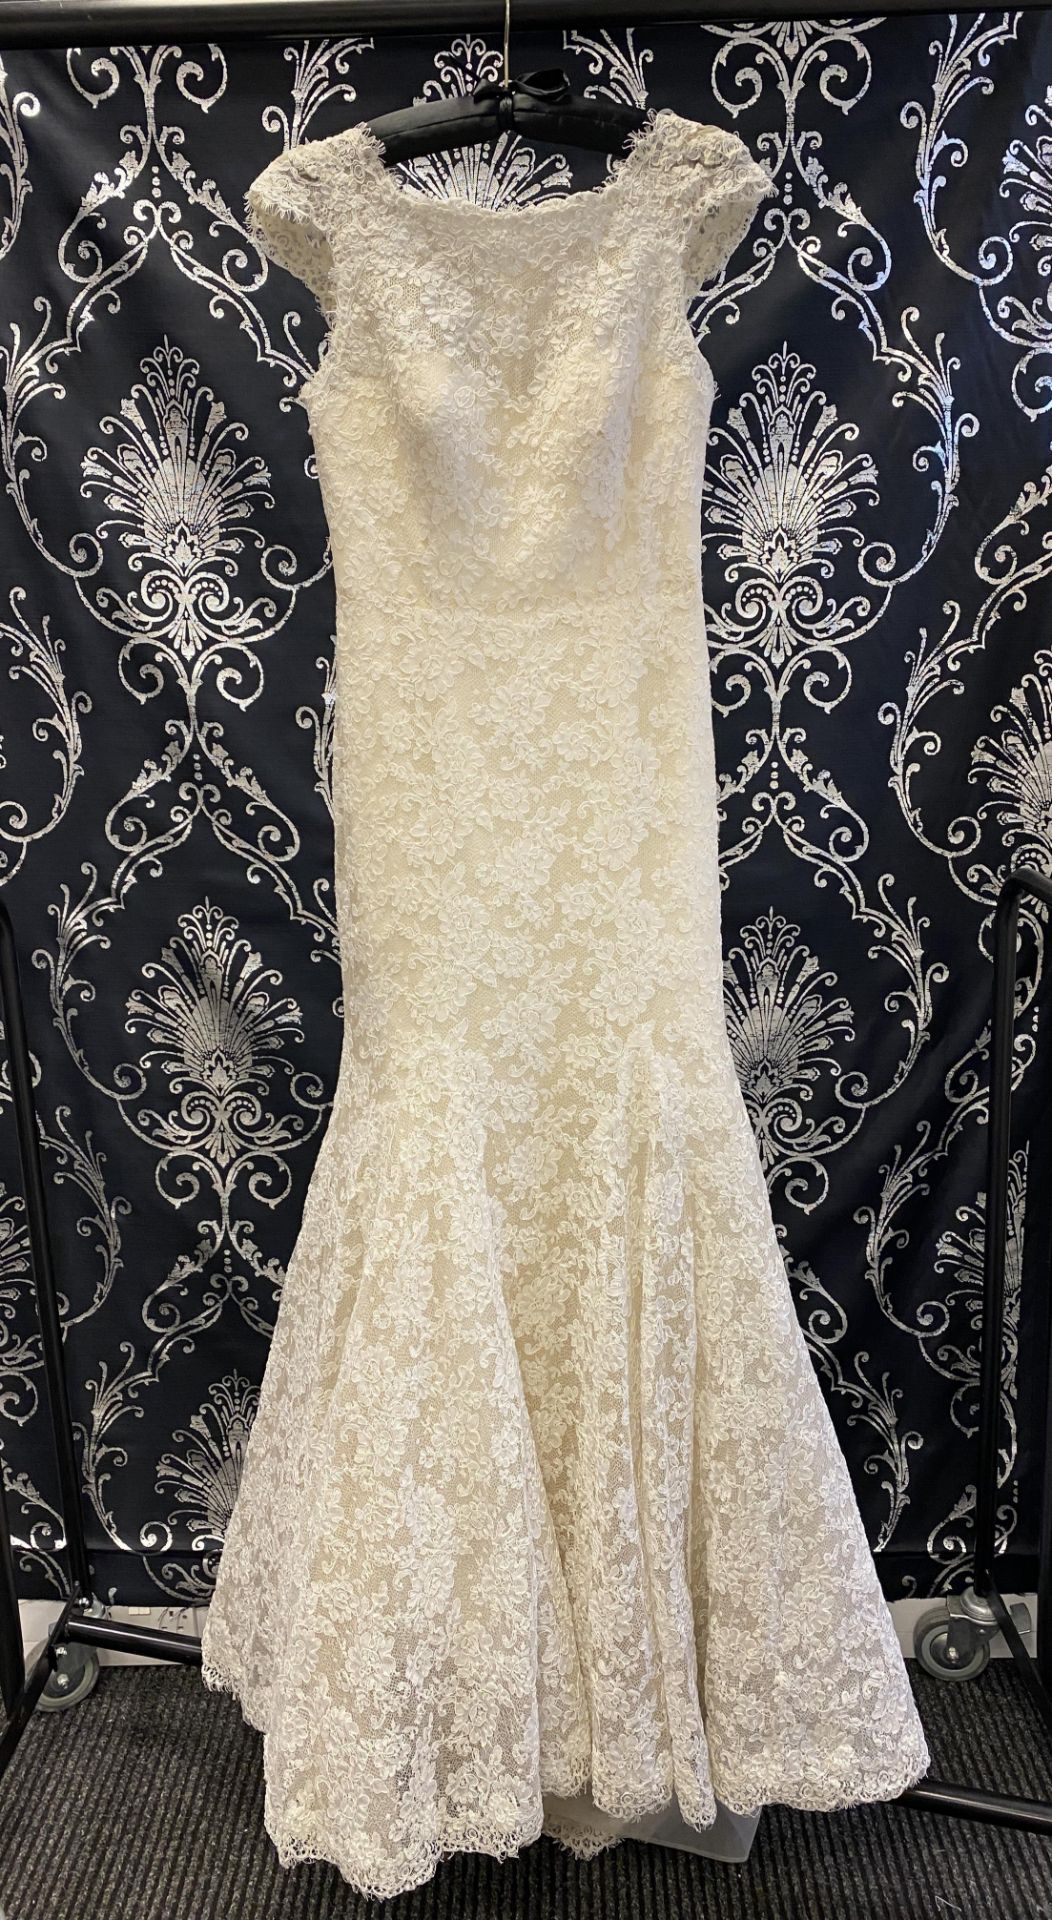 1 x ANNA SUL Y 'White Rose' Full Lace Mermaid Style Designer Wedding Dress RRP £1,250